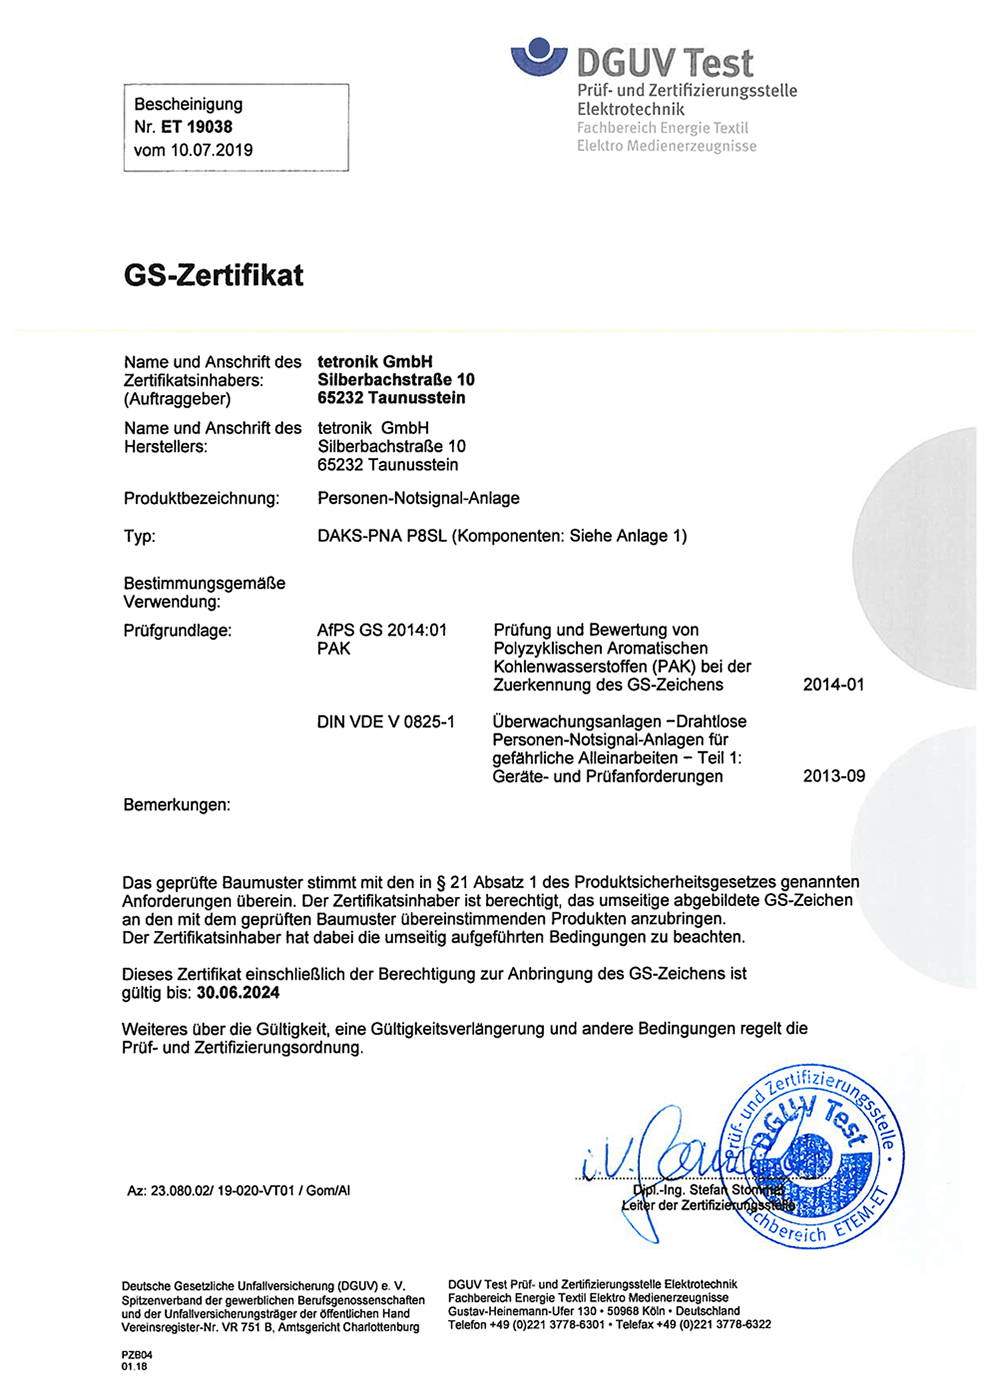 DGUV-Zertifikat für DAKS-PNA P8SL